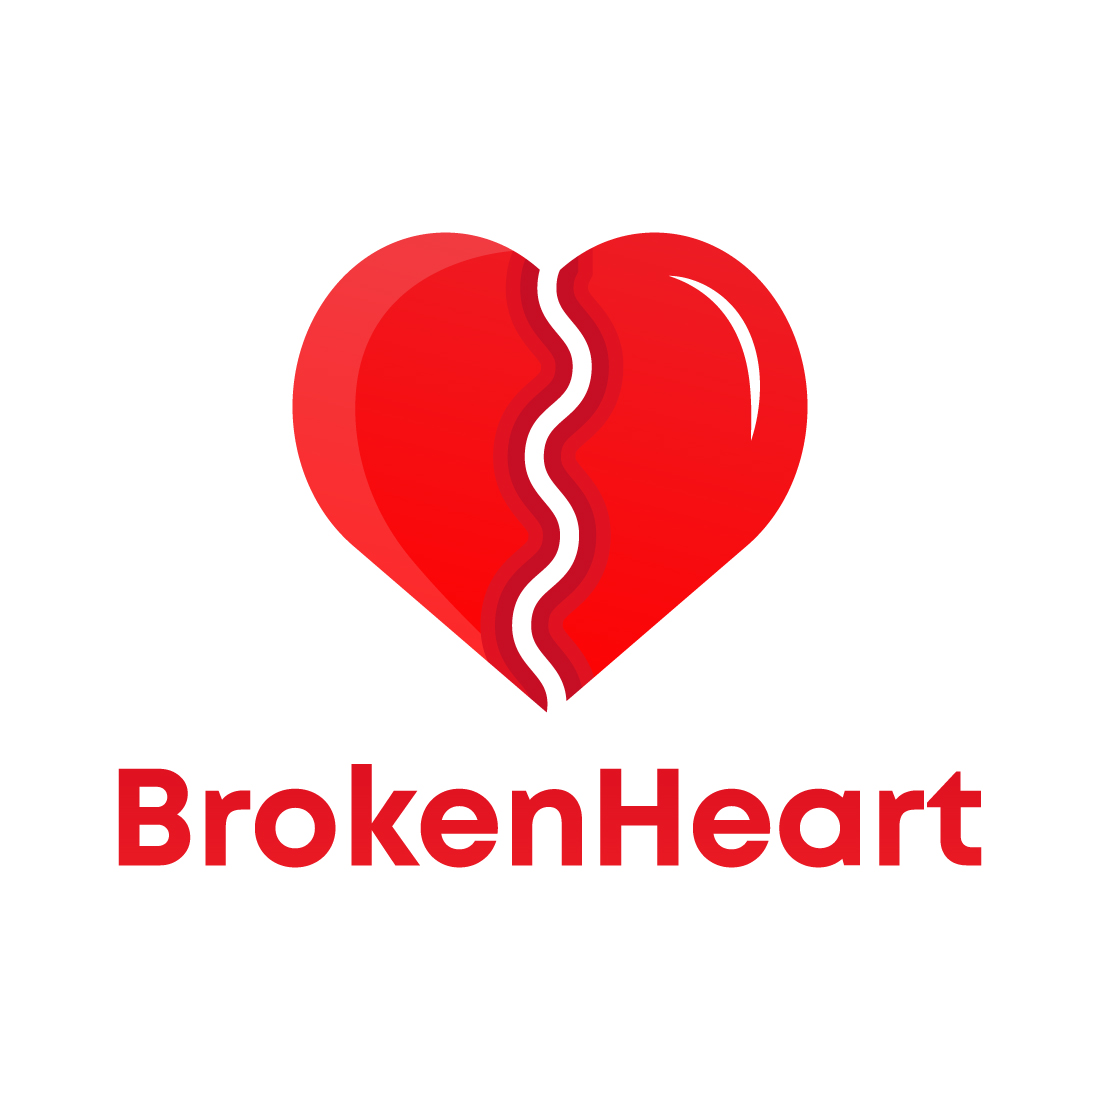 Broken Heart icon preview image.